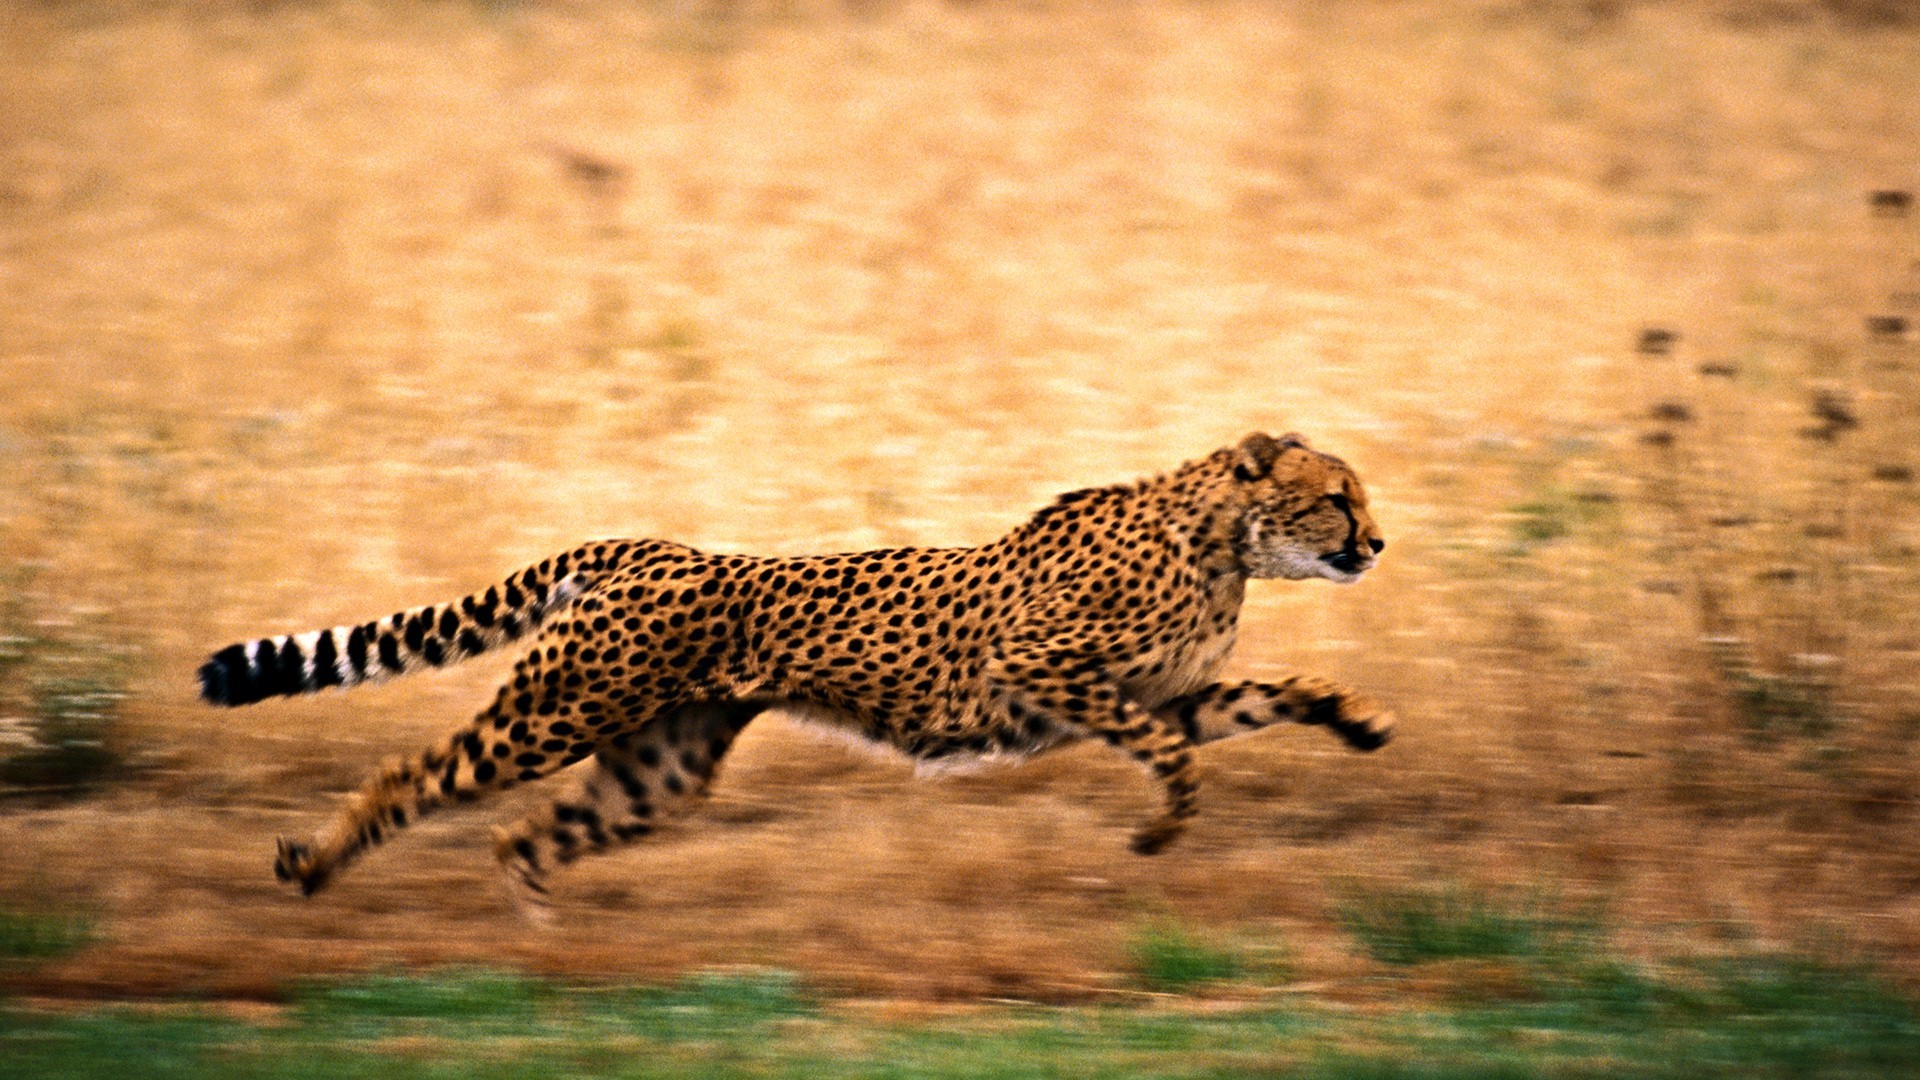 1920x1080 Cheetah Full HD Wallpaper and Background Image | 2930x1710 | ID:249180